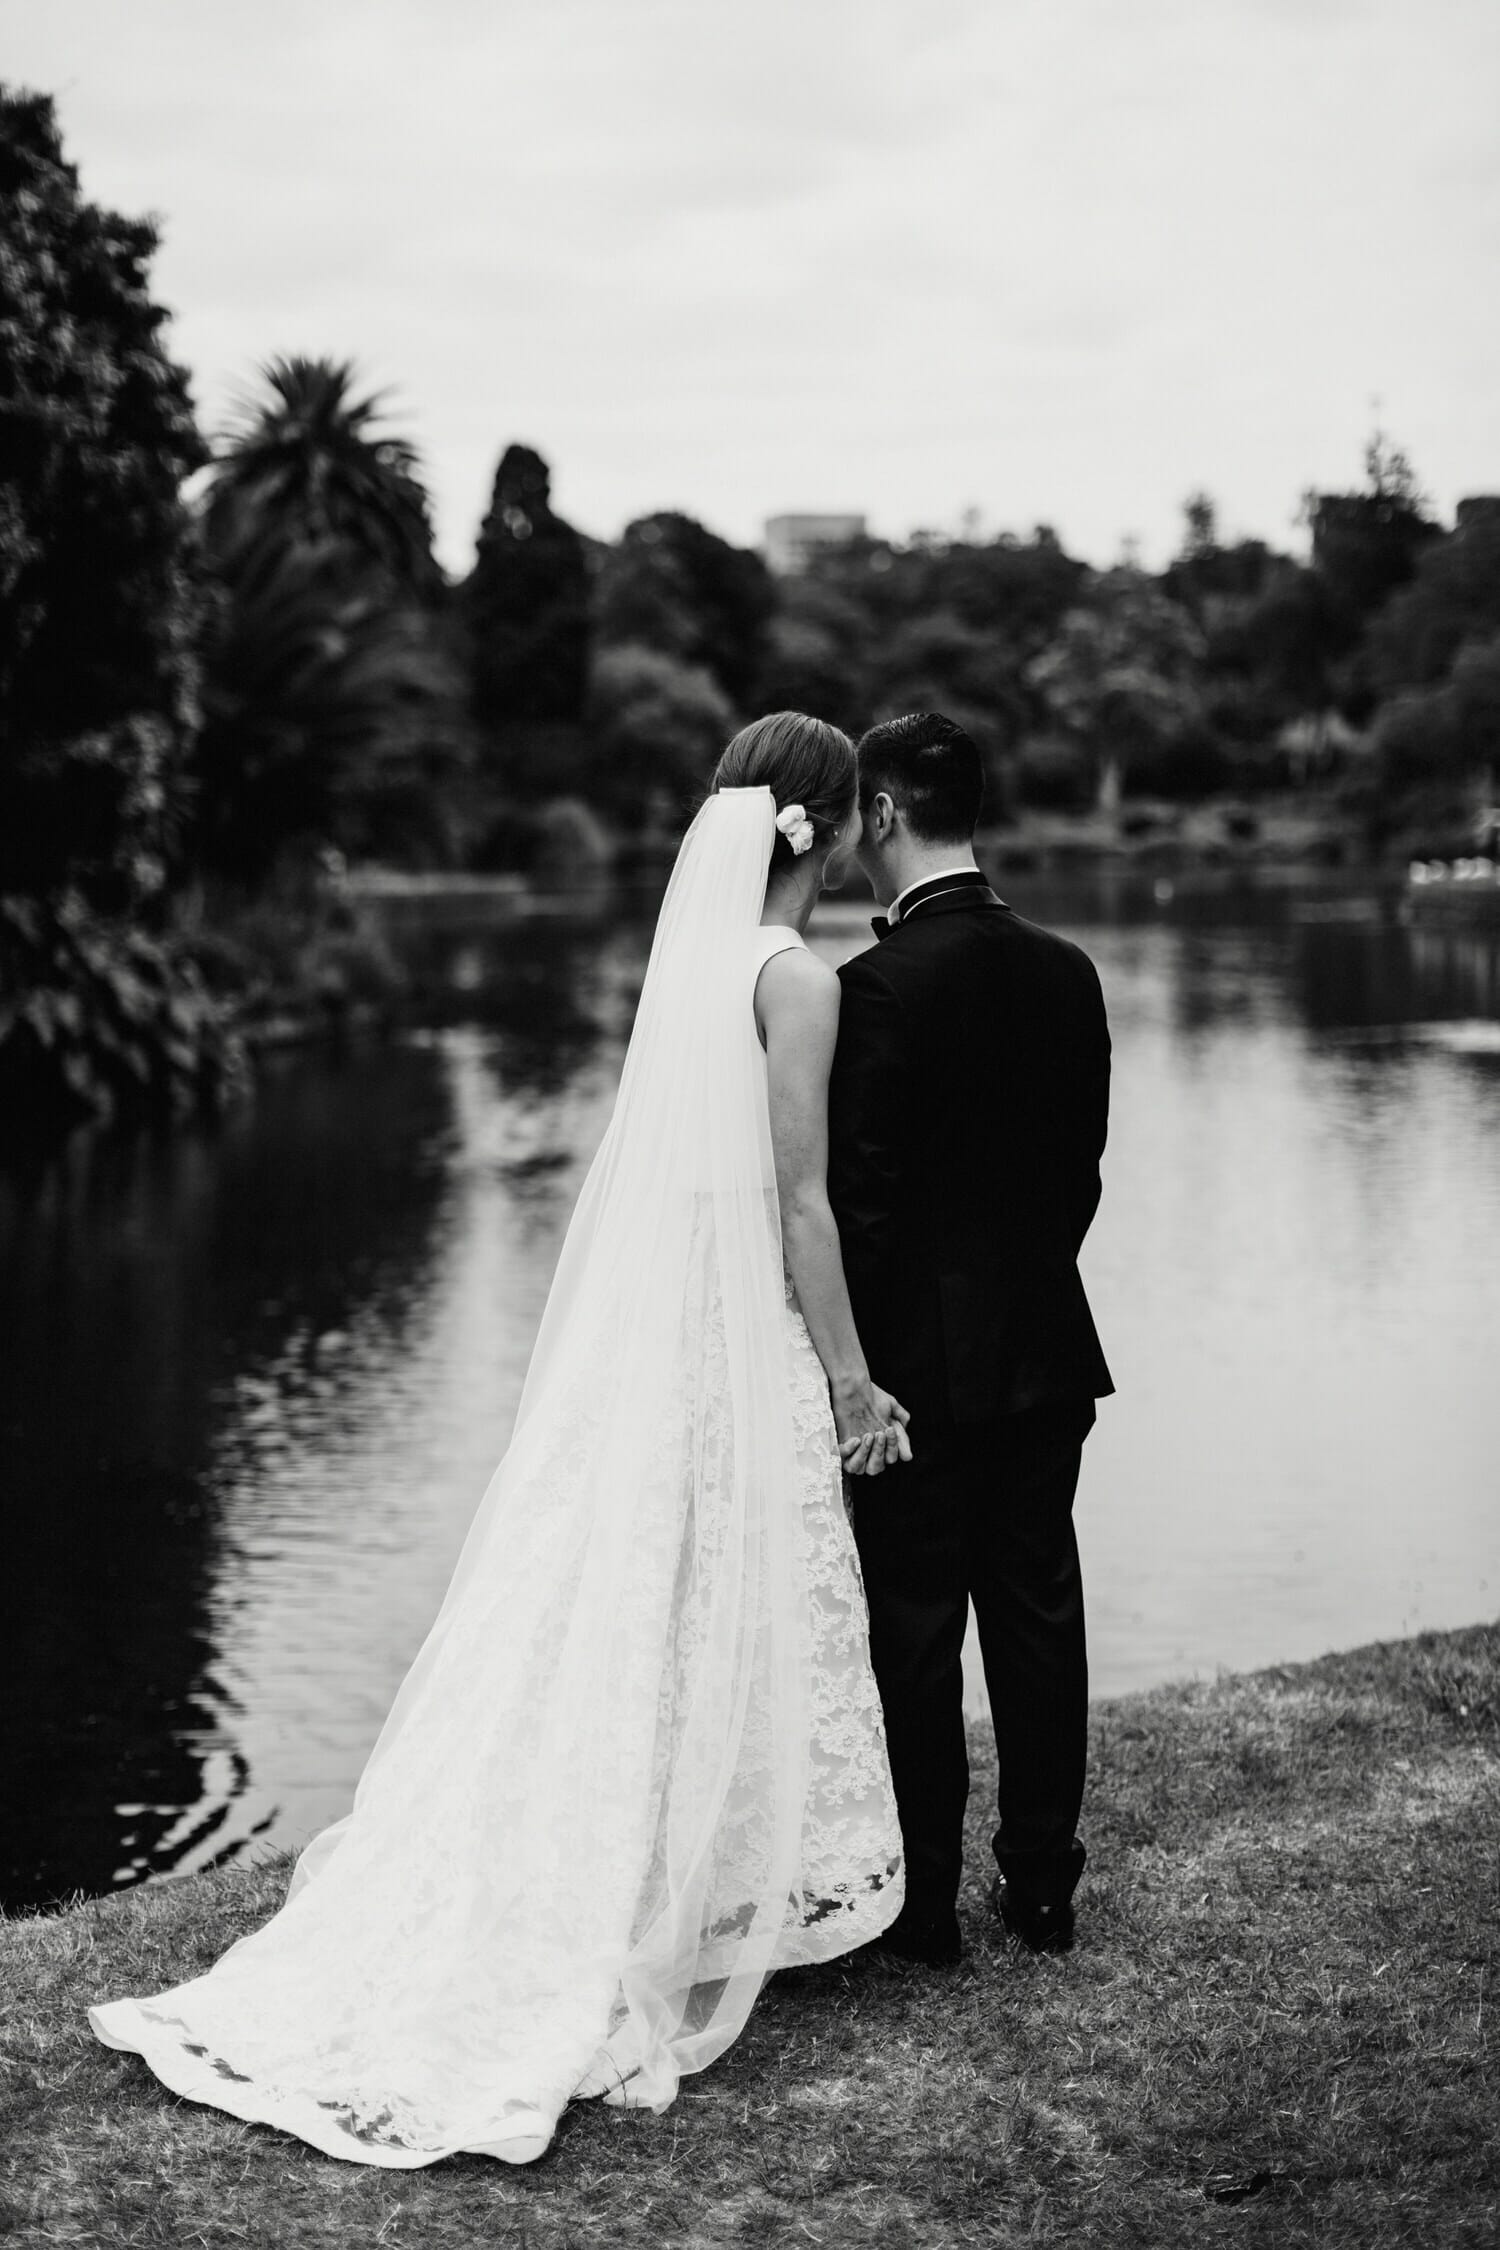 Amy + Matias, Intimate Garden Wedding Melbourne Wedding Photographer